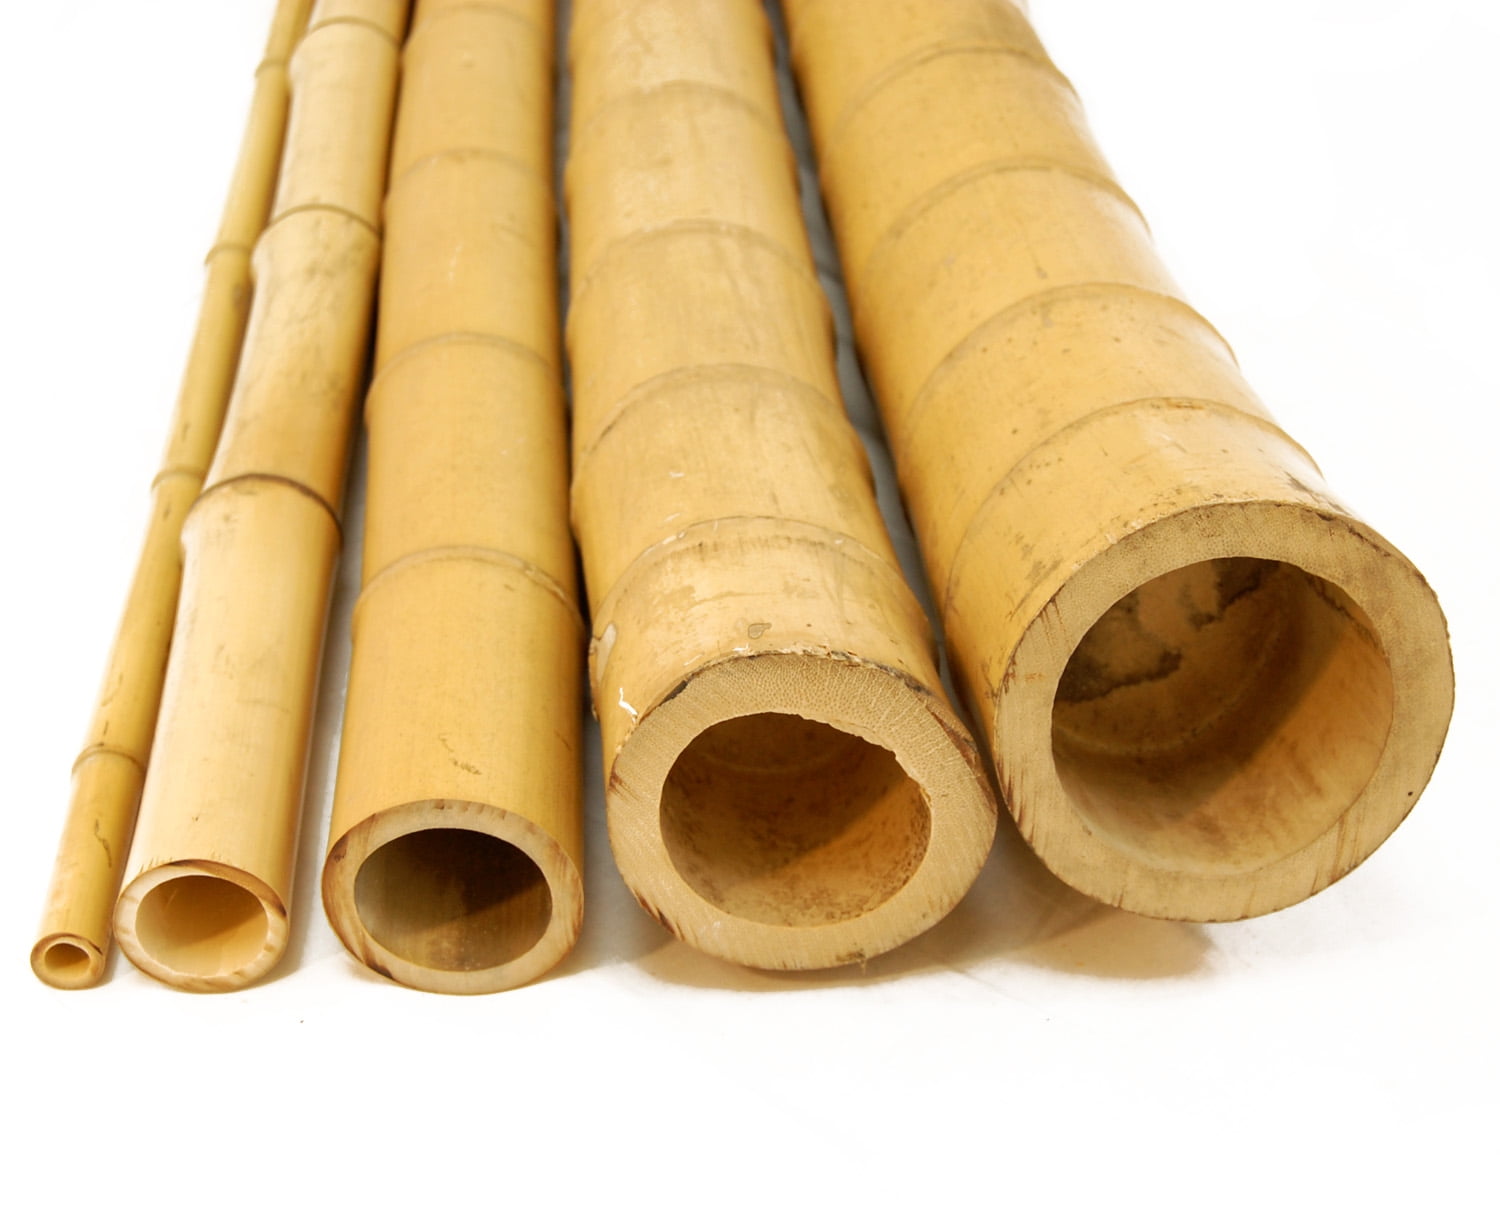 1 - 1-1/2 X 12' Natural Bamboo Poles, Natural Bamboo Sticks